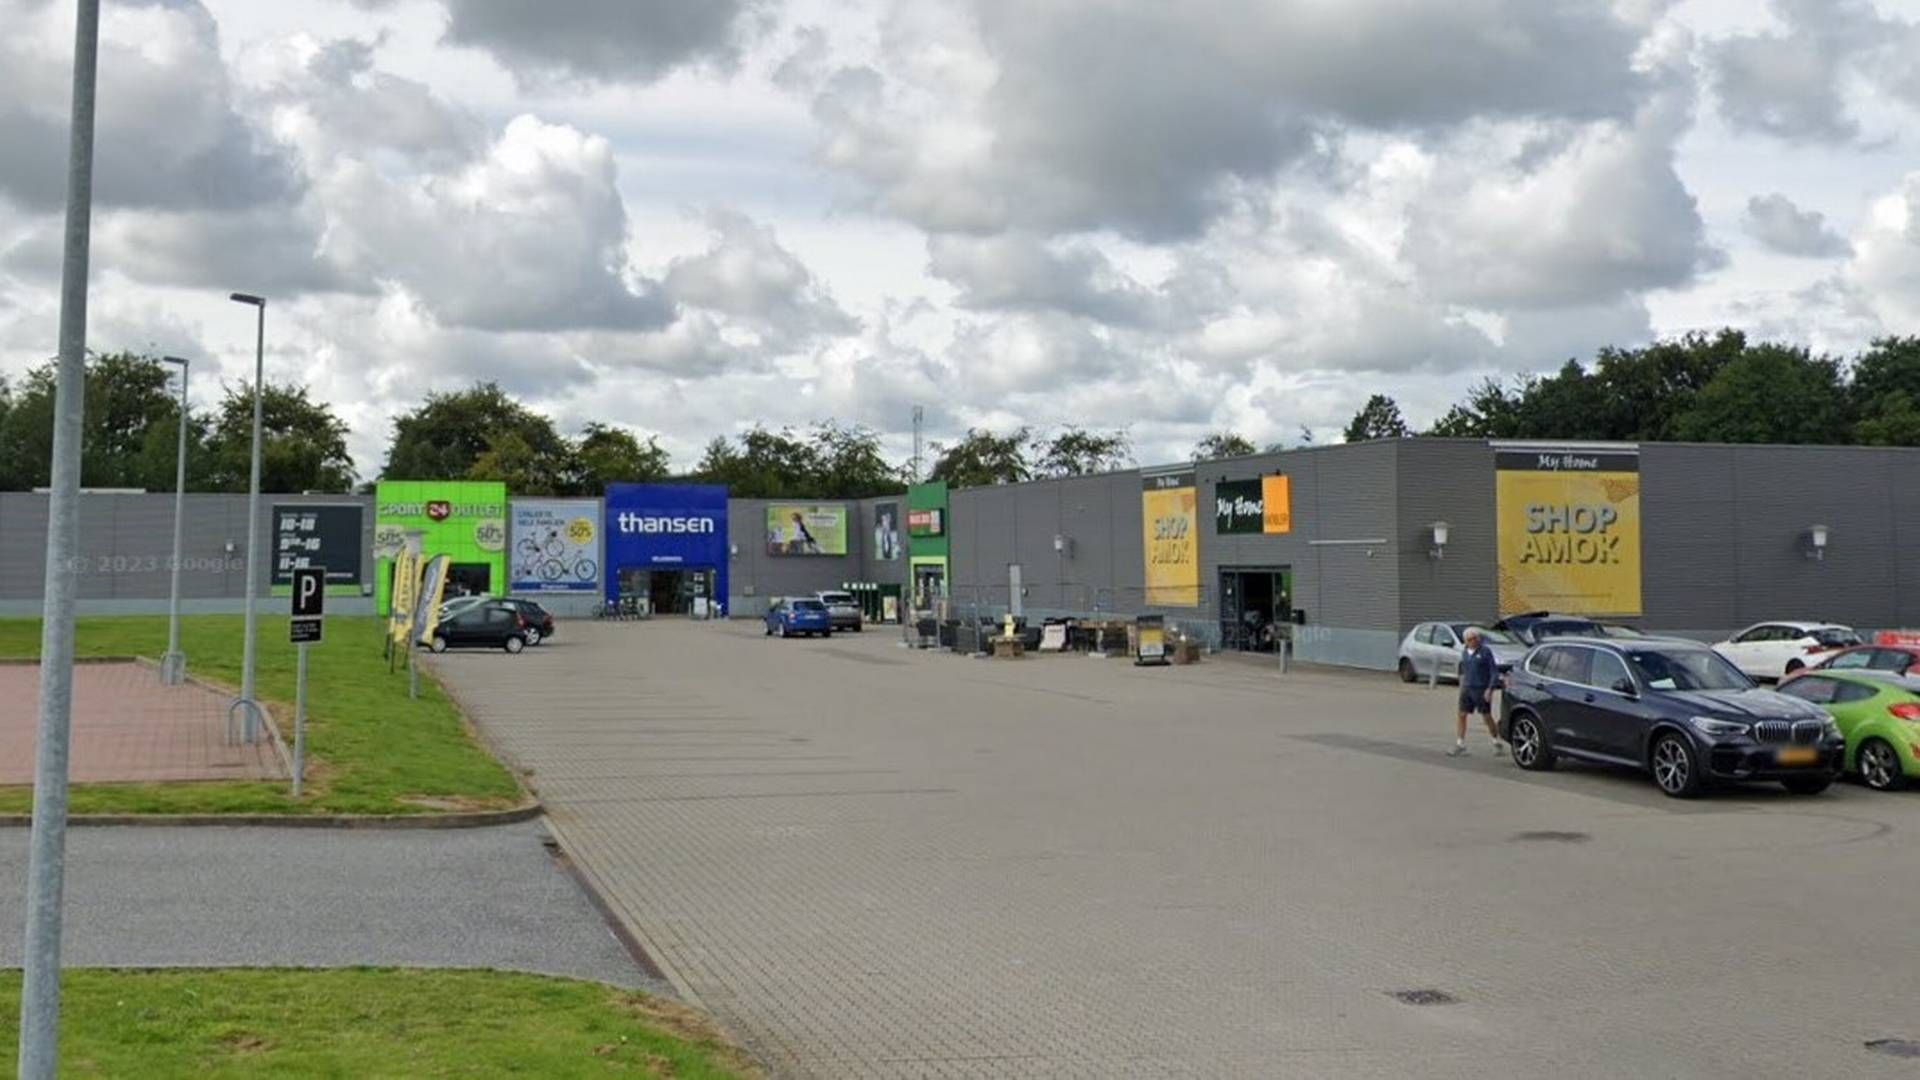 De fire butikker, som ligger på adressen Langebro 40 i Aabenraa, er Sport24, Thansen, Maxi Zoo og My Home. | Foto: Google Maps